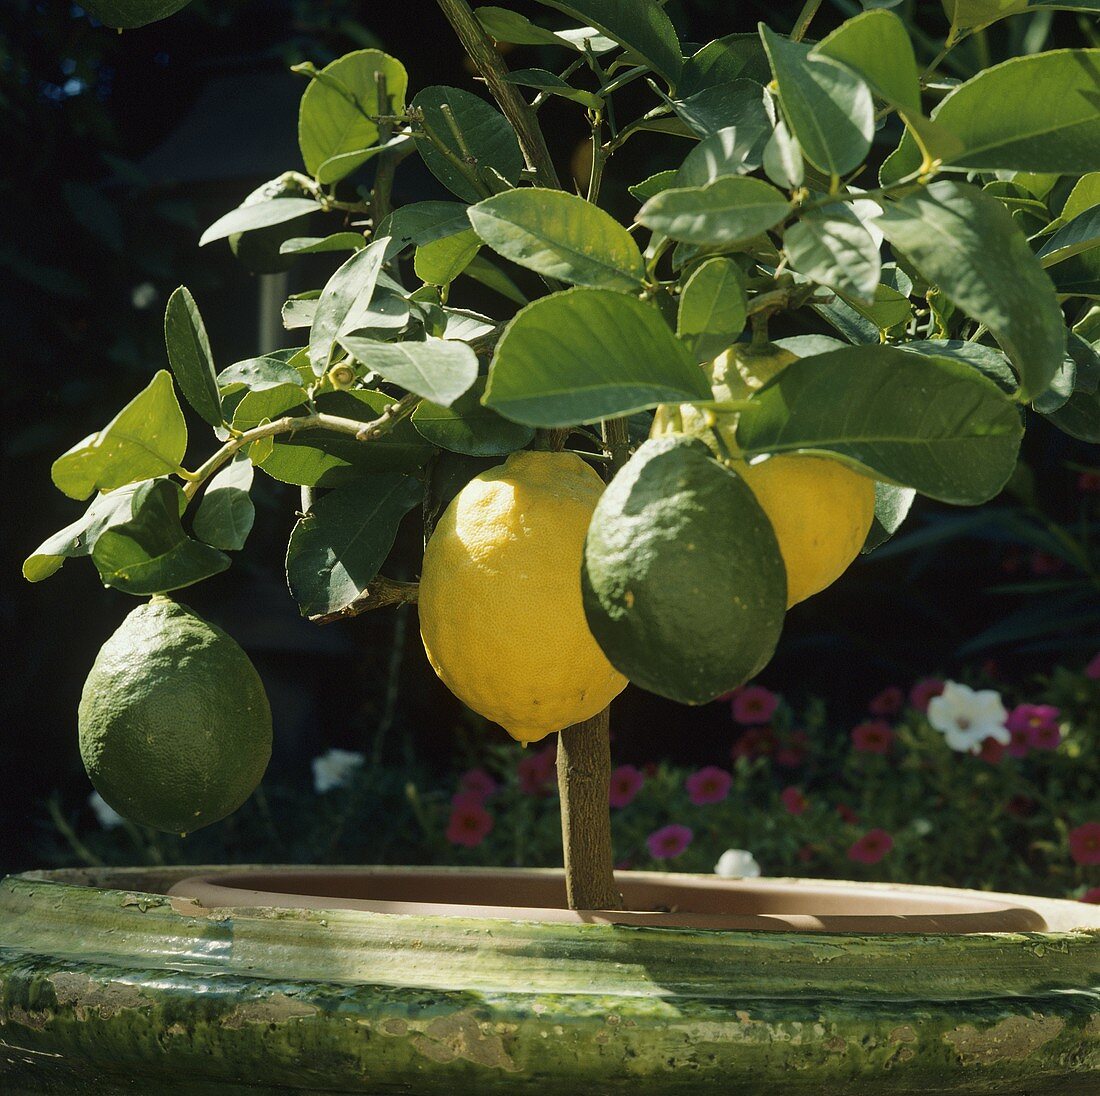 Ripe and unripe lemons on a small tree